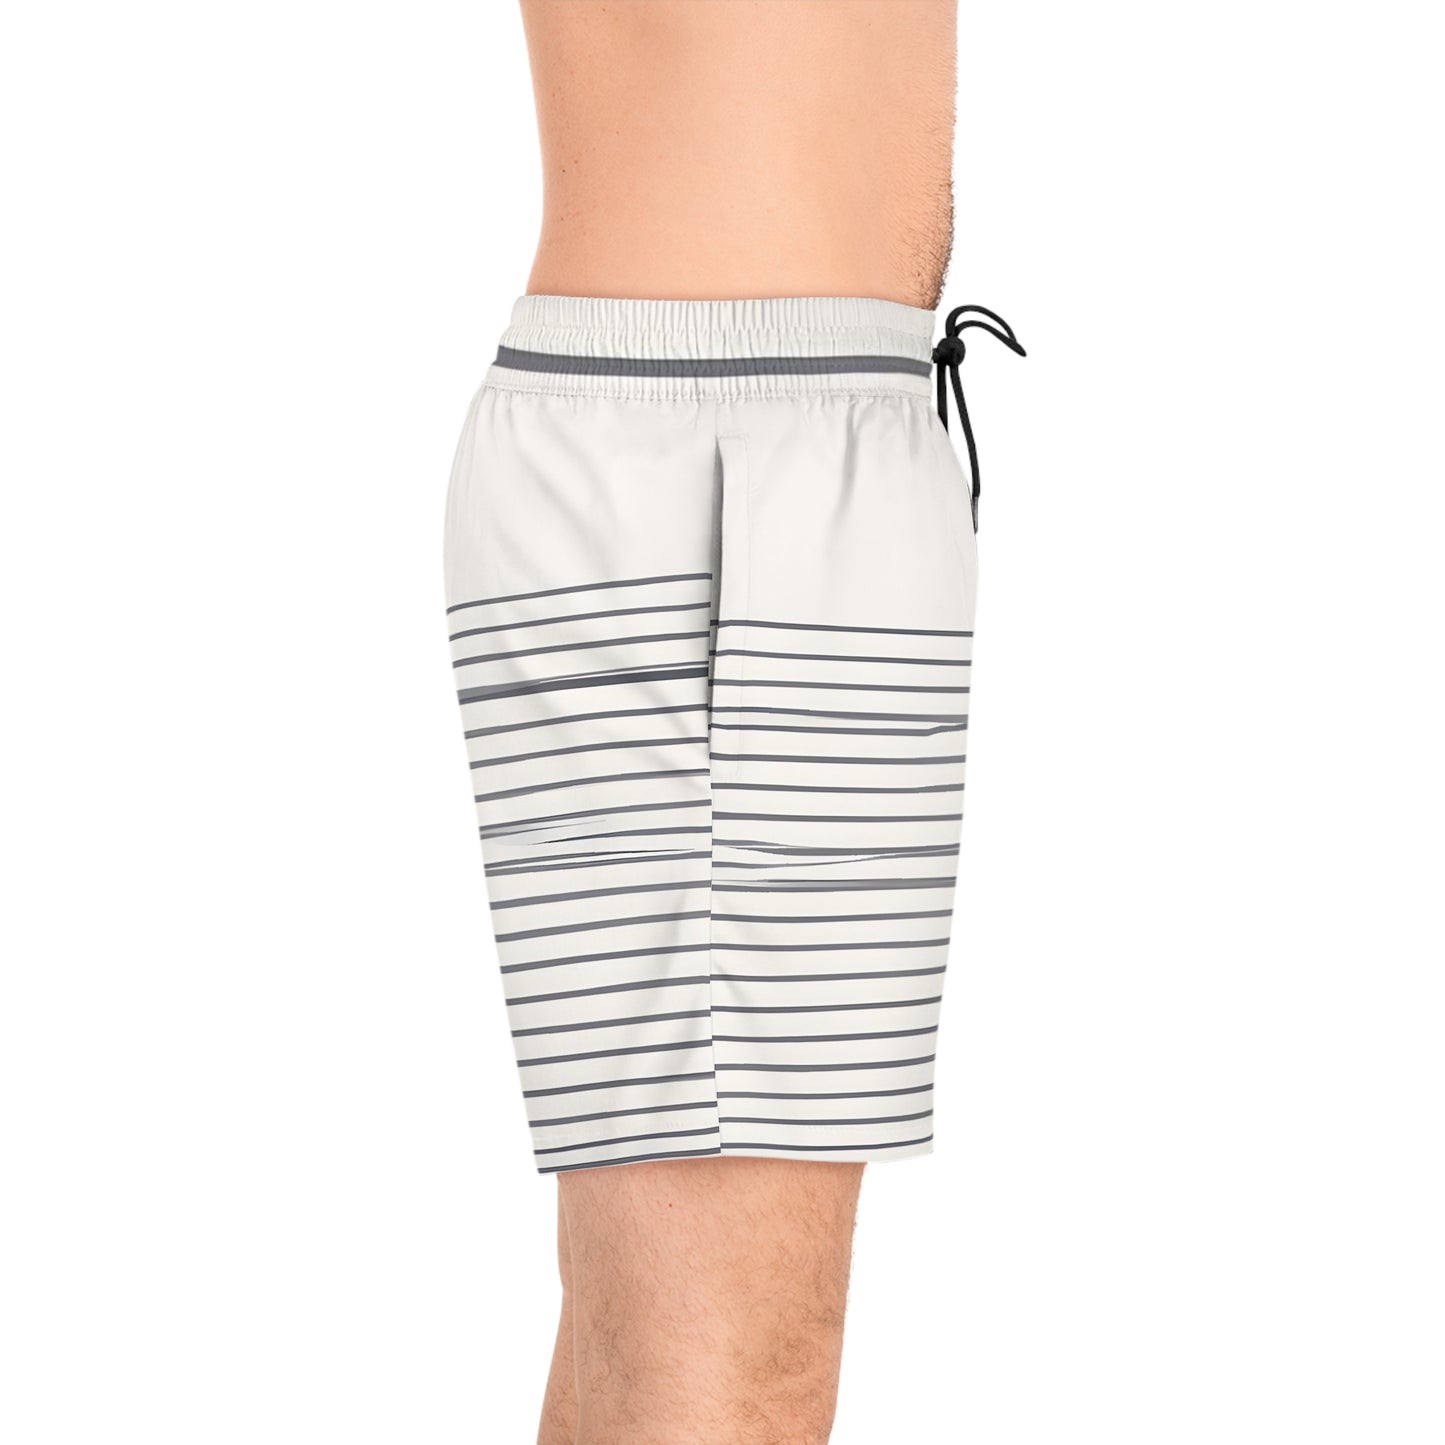 Lino Winifred - Men's Mid-Length Swim Shorts